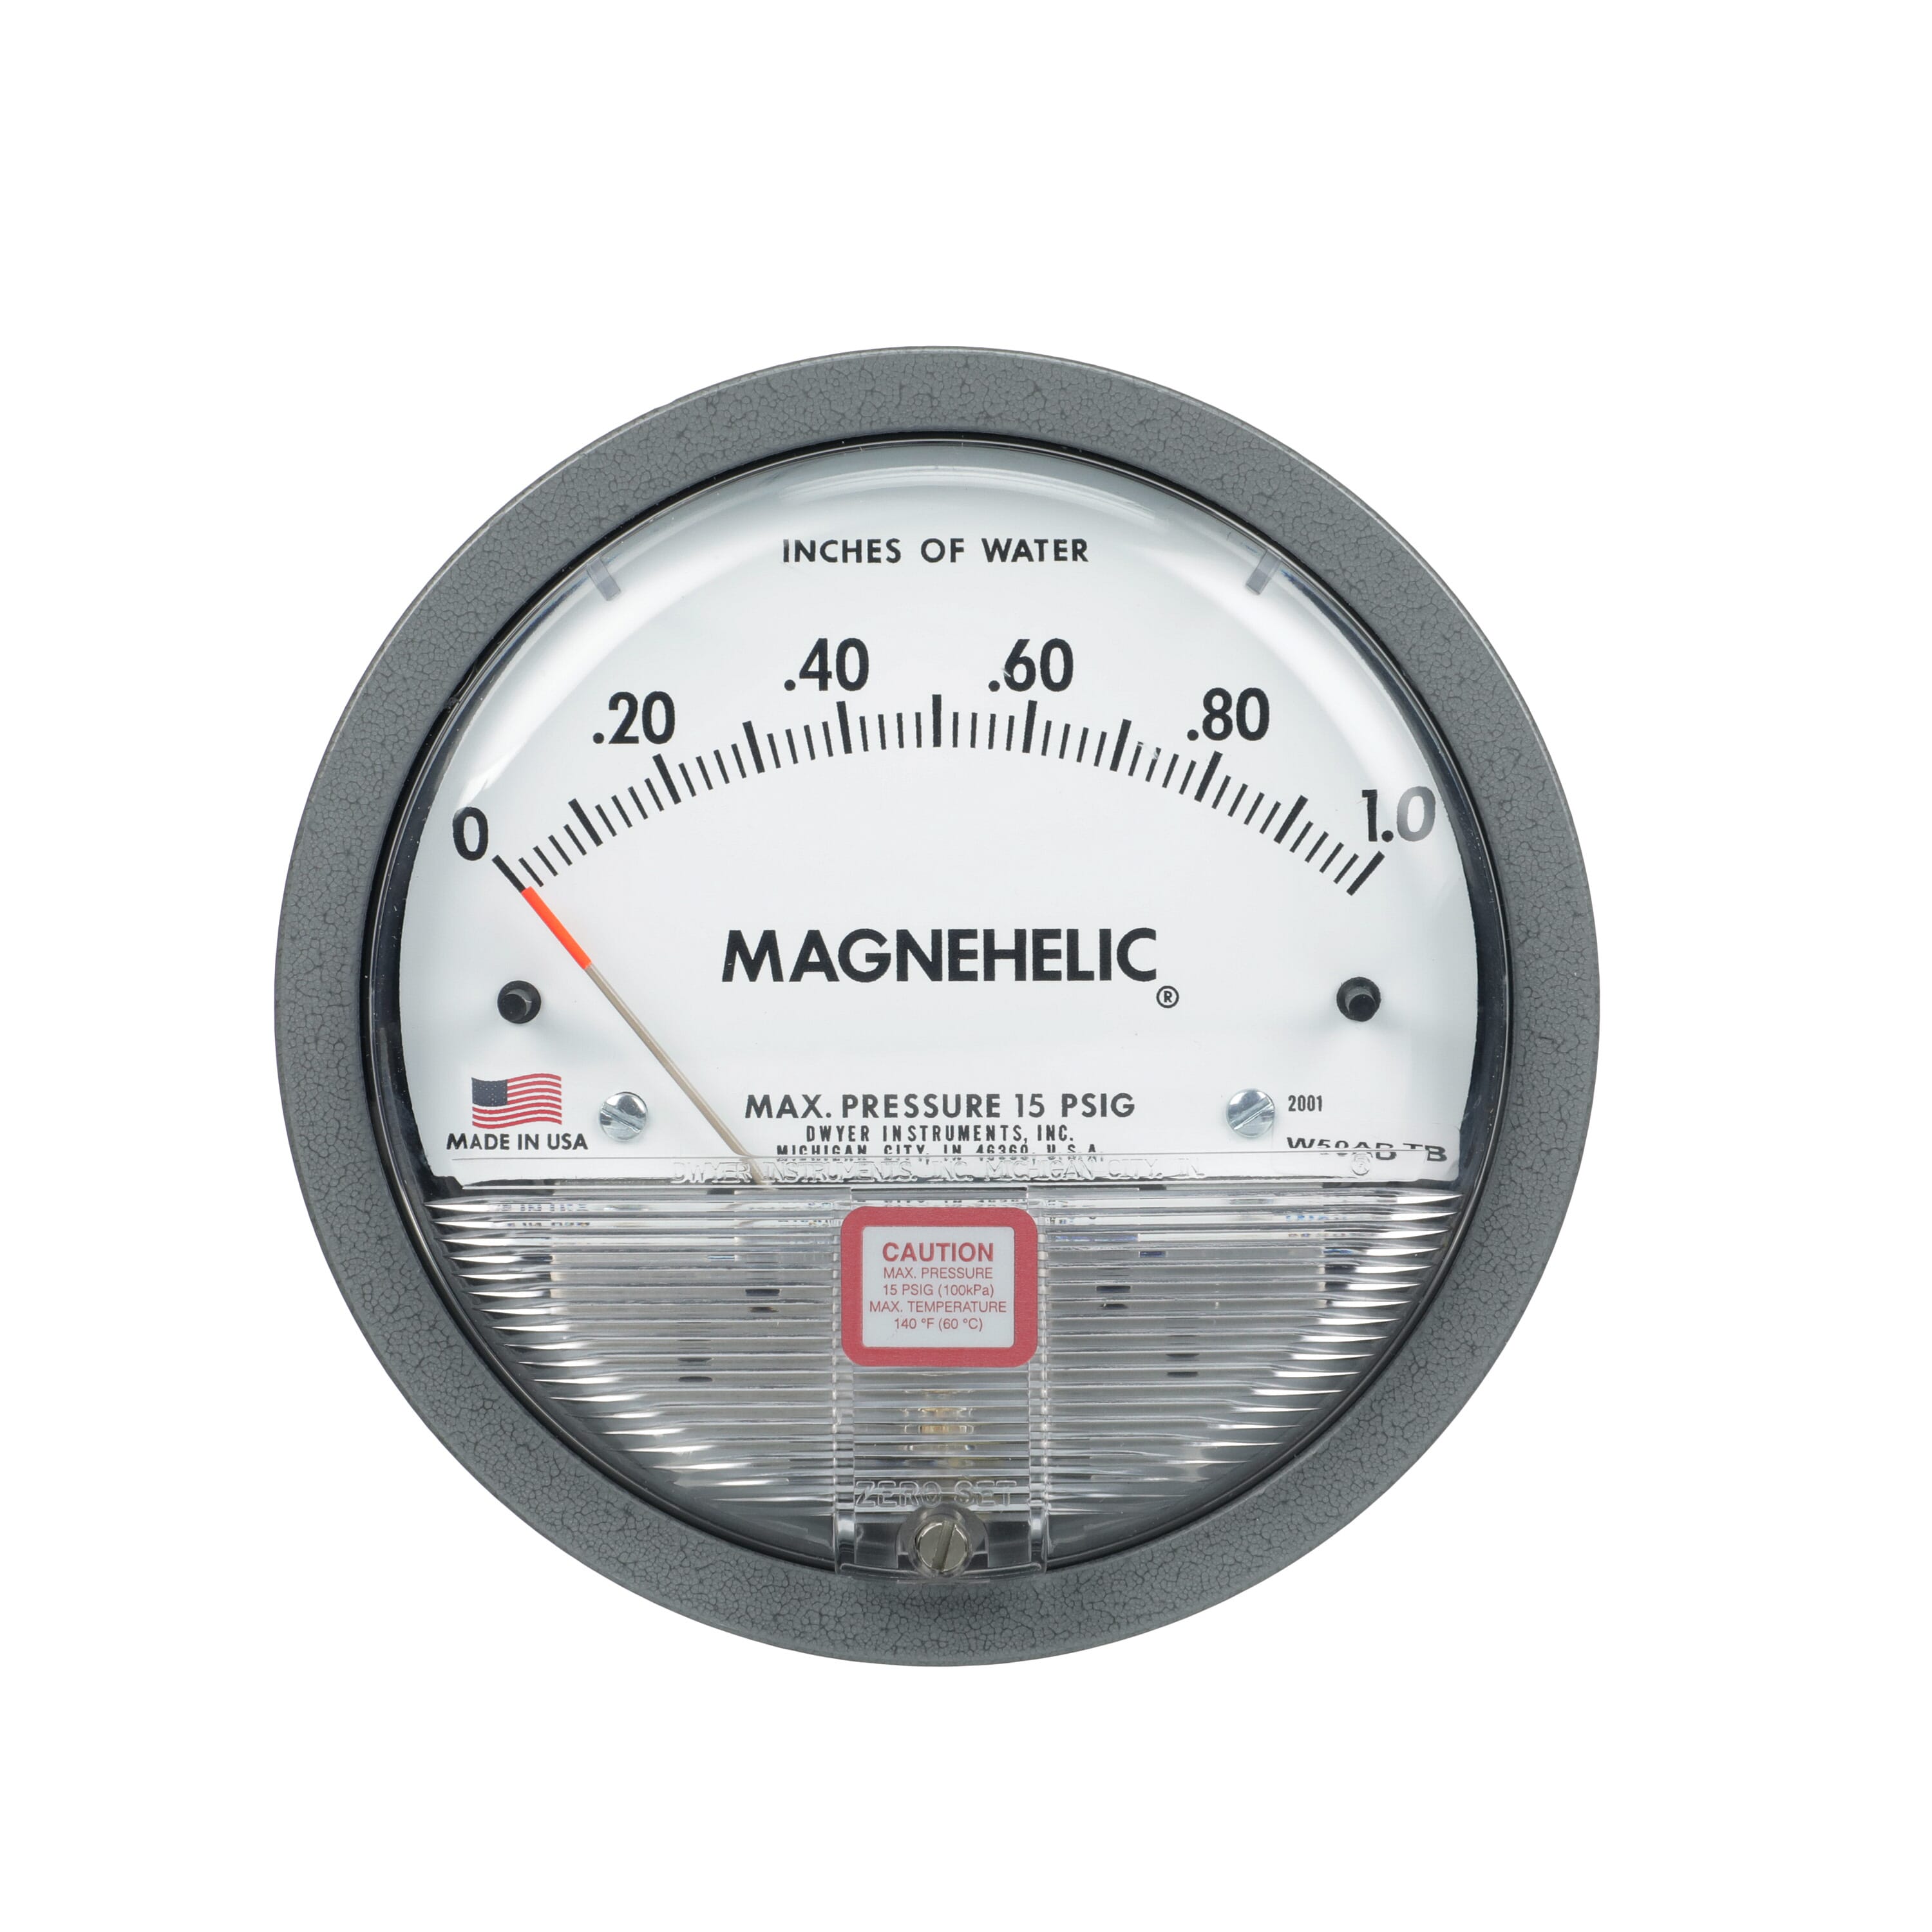 34kpa Digital Manometer Air Pressure Meter Pressure Gauges Differential Gauge Kit Data Hold